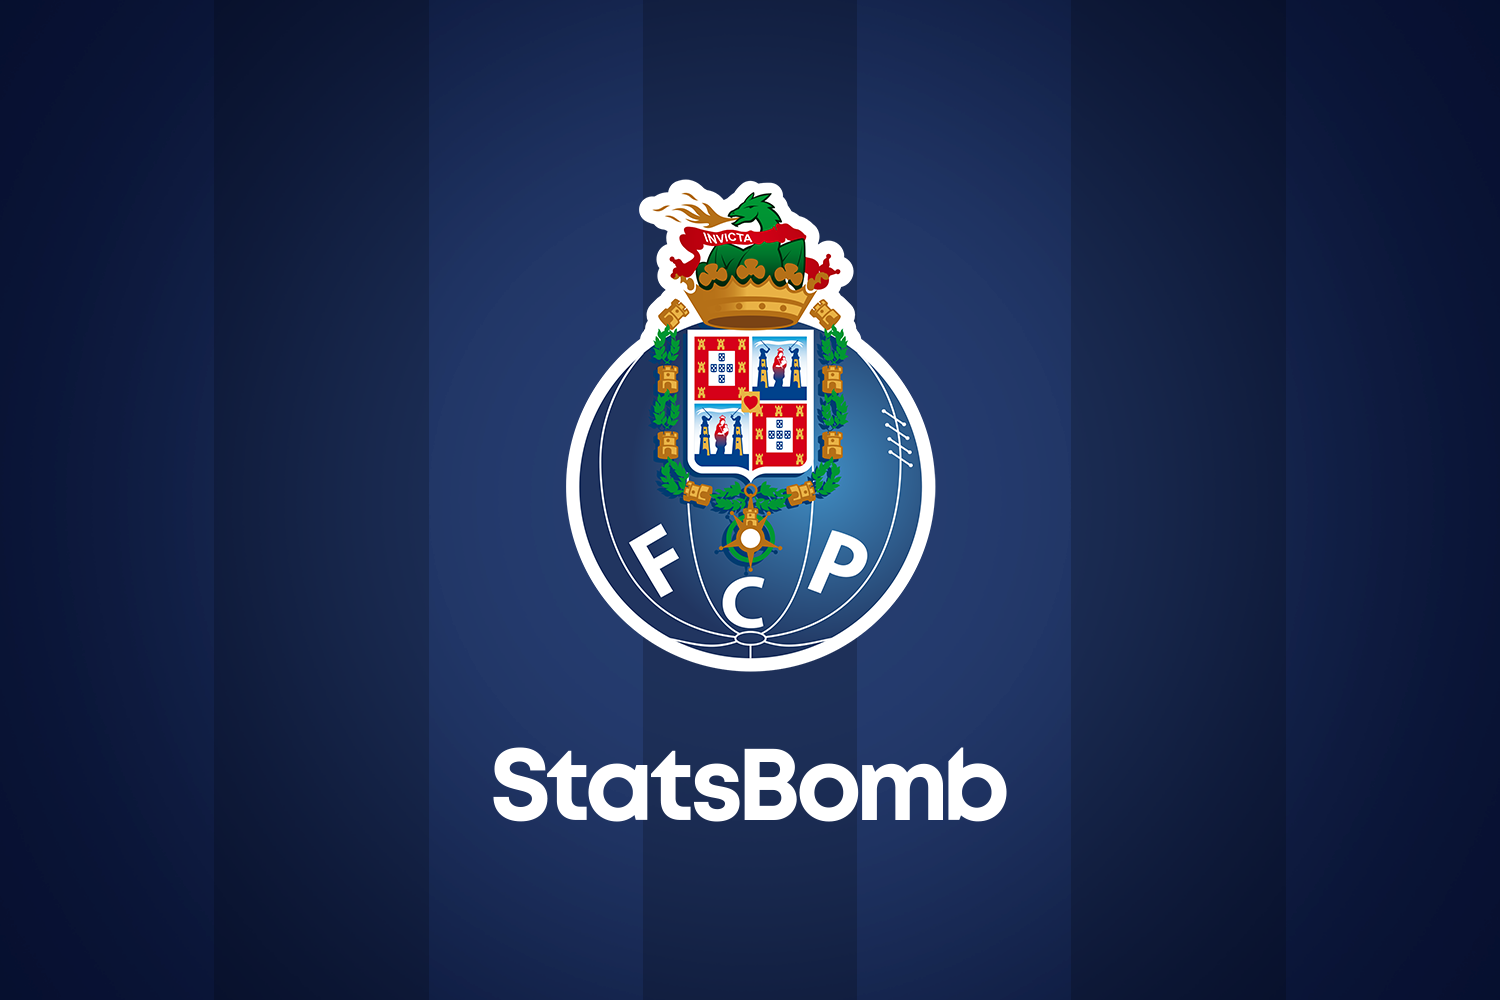 StatsBomb Increases Portuguese Presence with Futebol Clube Do Porto Partnership